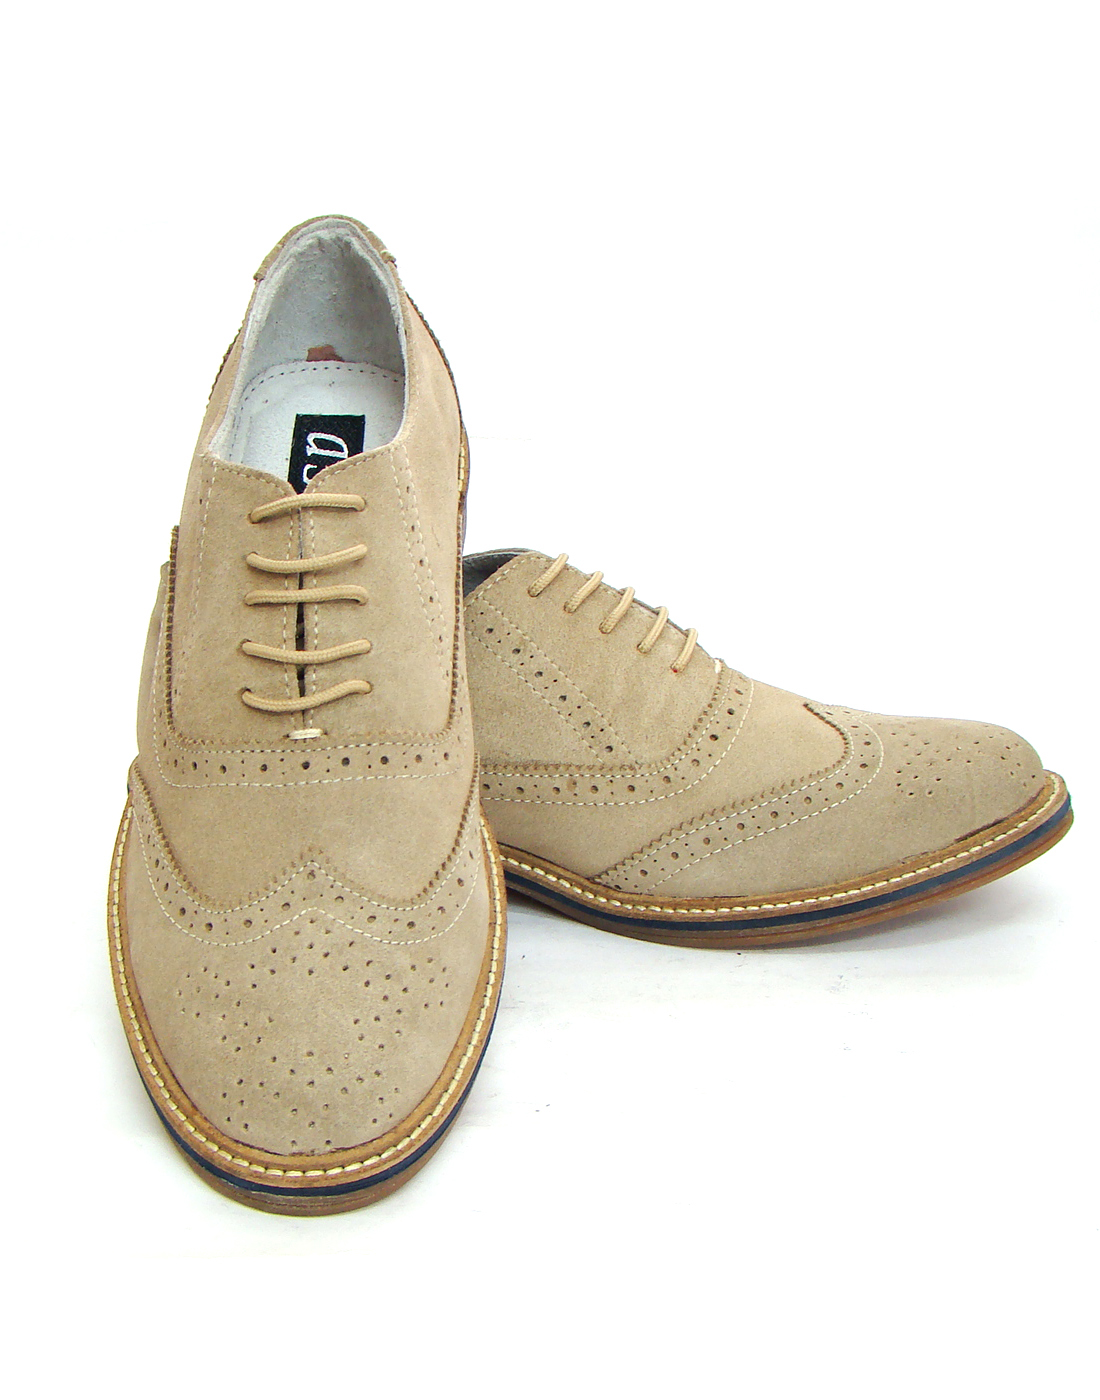 Buy Mens Brogues | Mens Brogue Boots & Brogue Shoes | Arthur Knight Shoes-calidas.vn